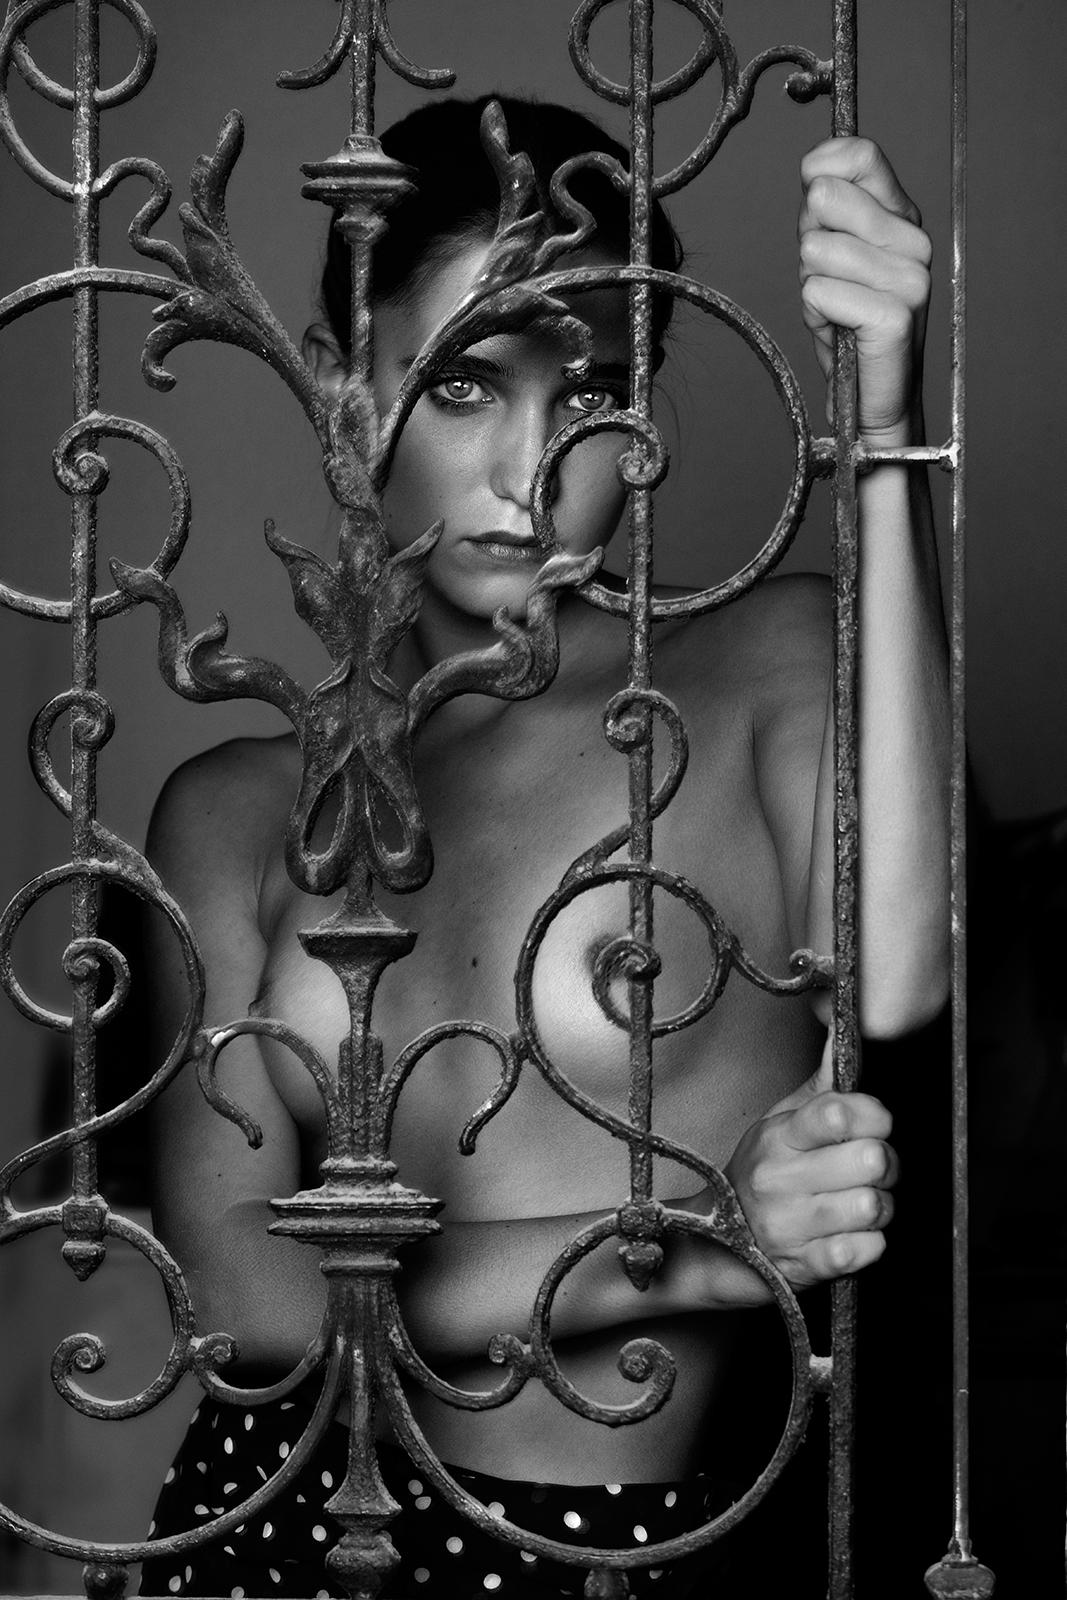 Ian Sanderson Nude Photograph - Signed limited edition nude fine art print, Woman Model, Intimate - Caroline